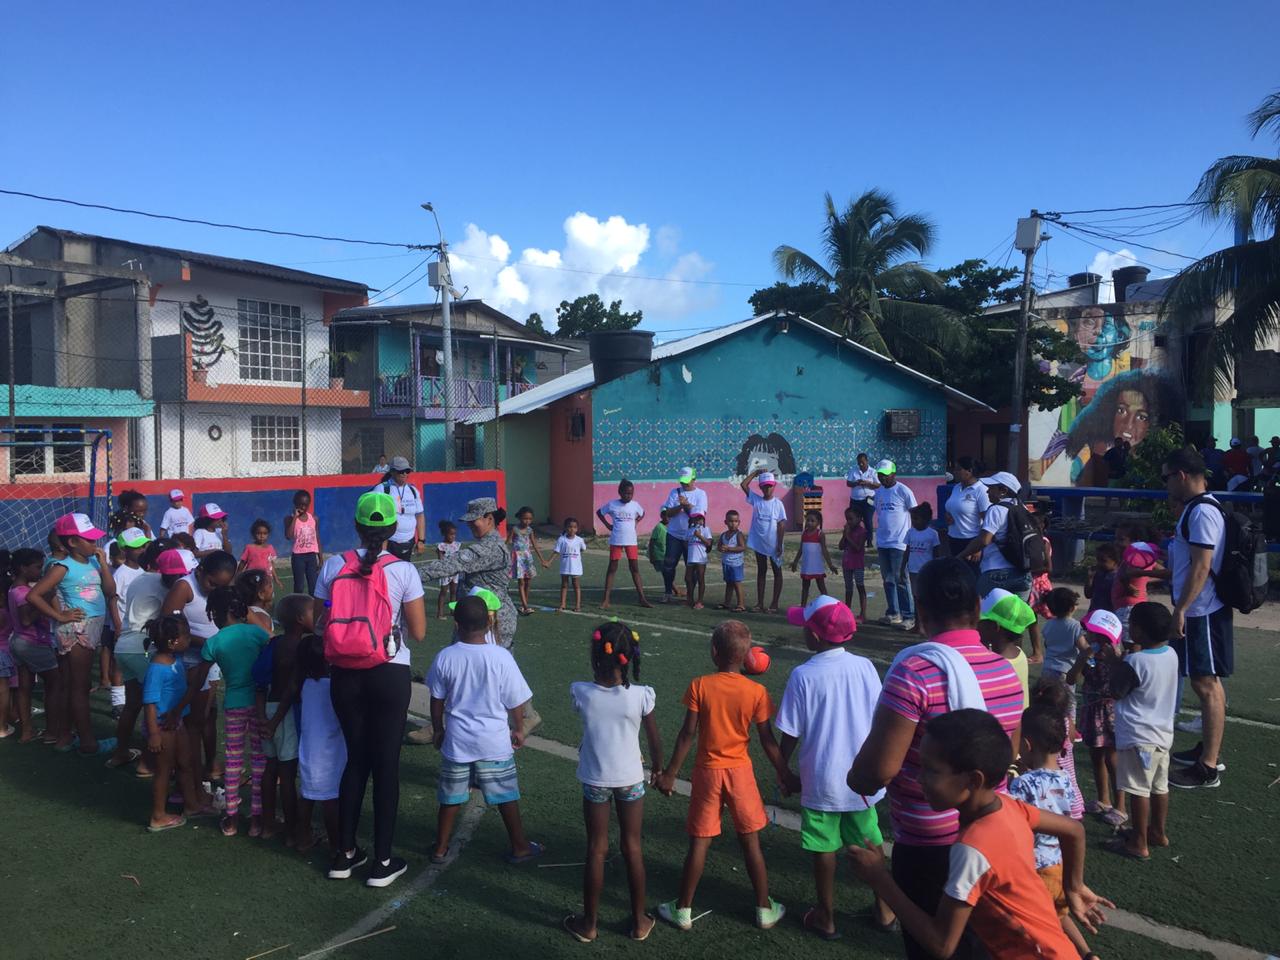 El Grupo Aéreo del Caribe promueve el deporte en el sector de las Tablitas de la Isla de San Andrés